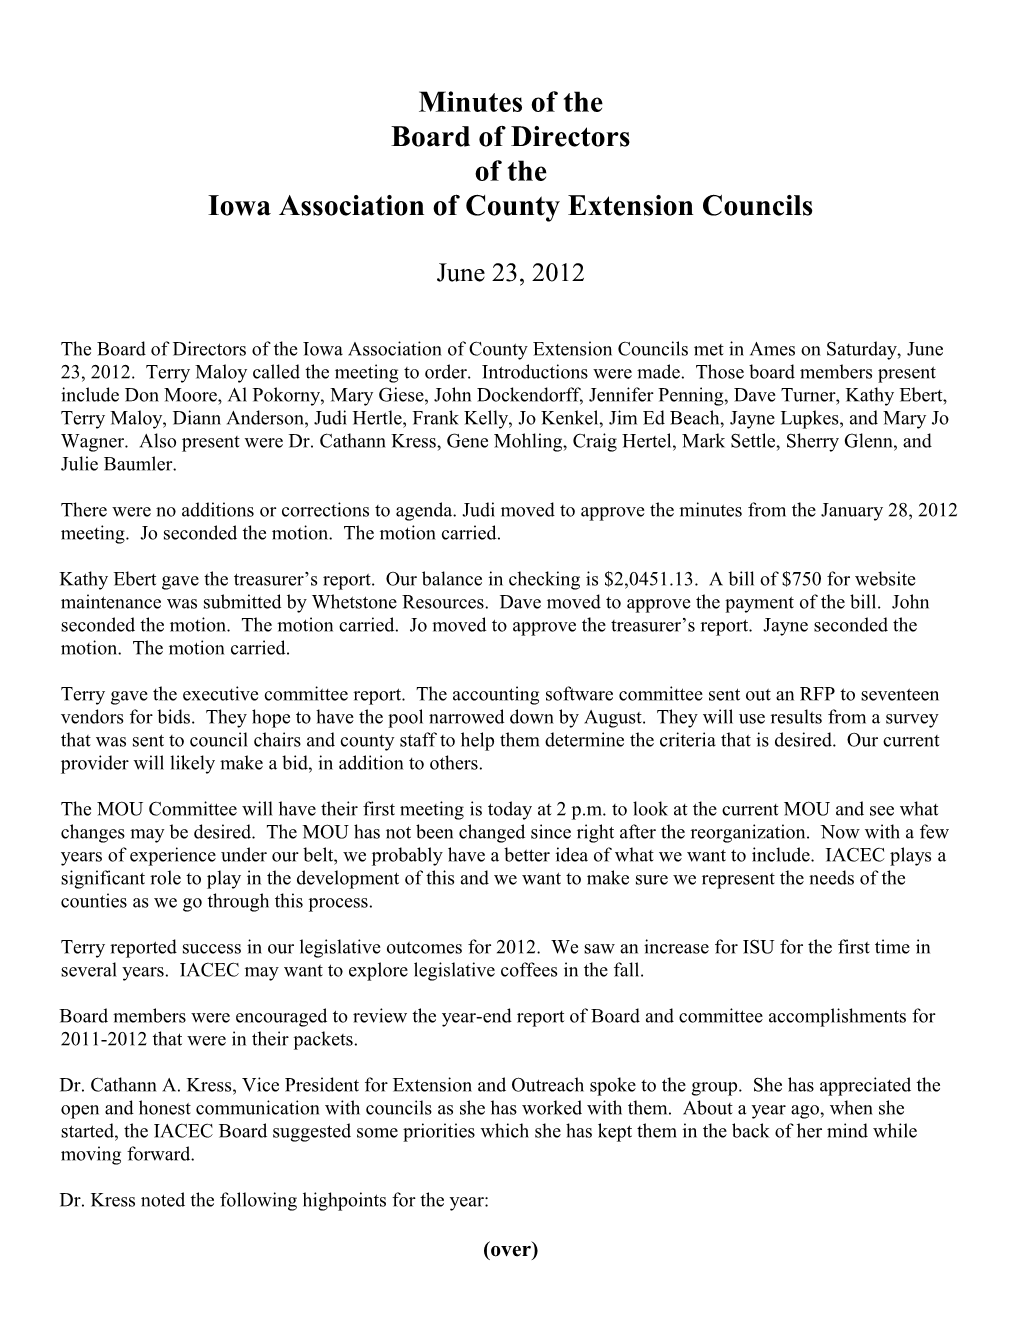 State Extension Council Association